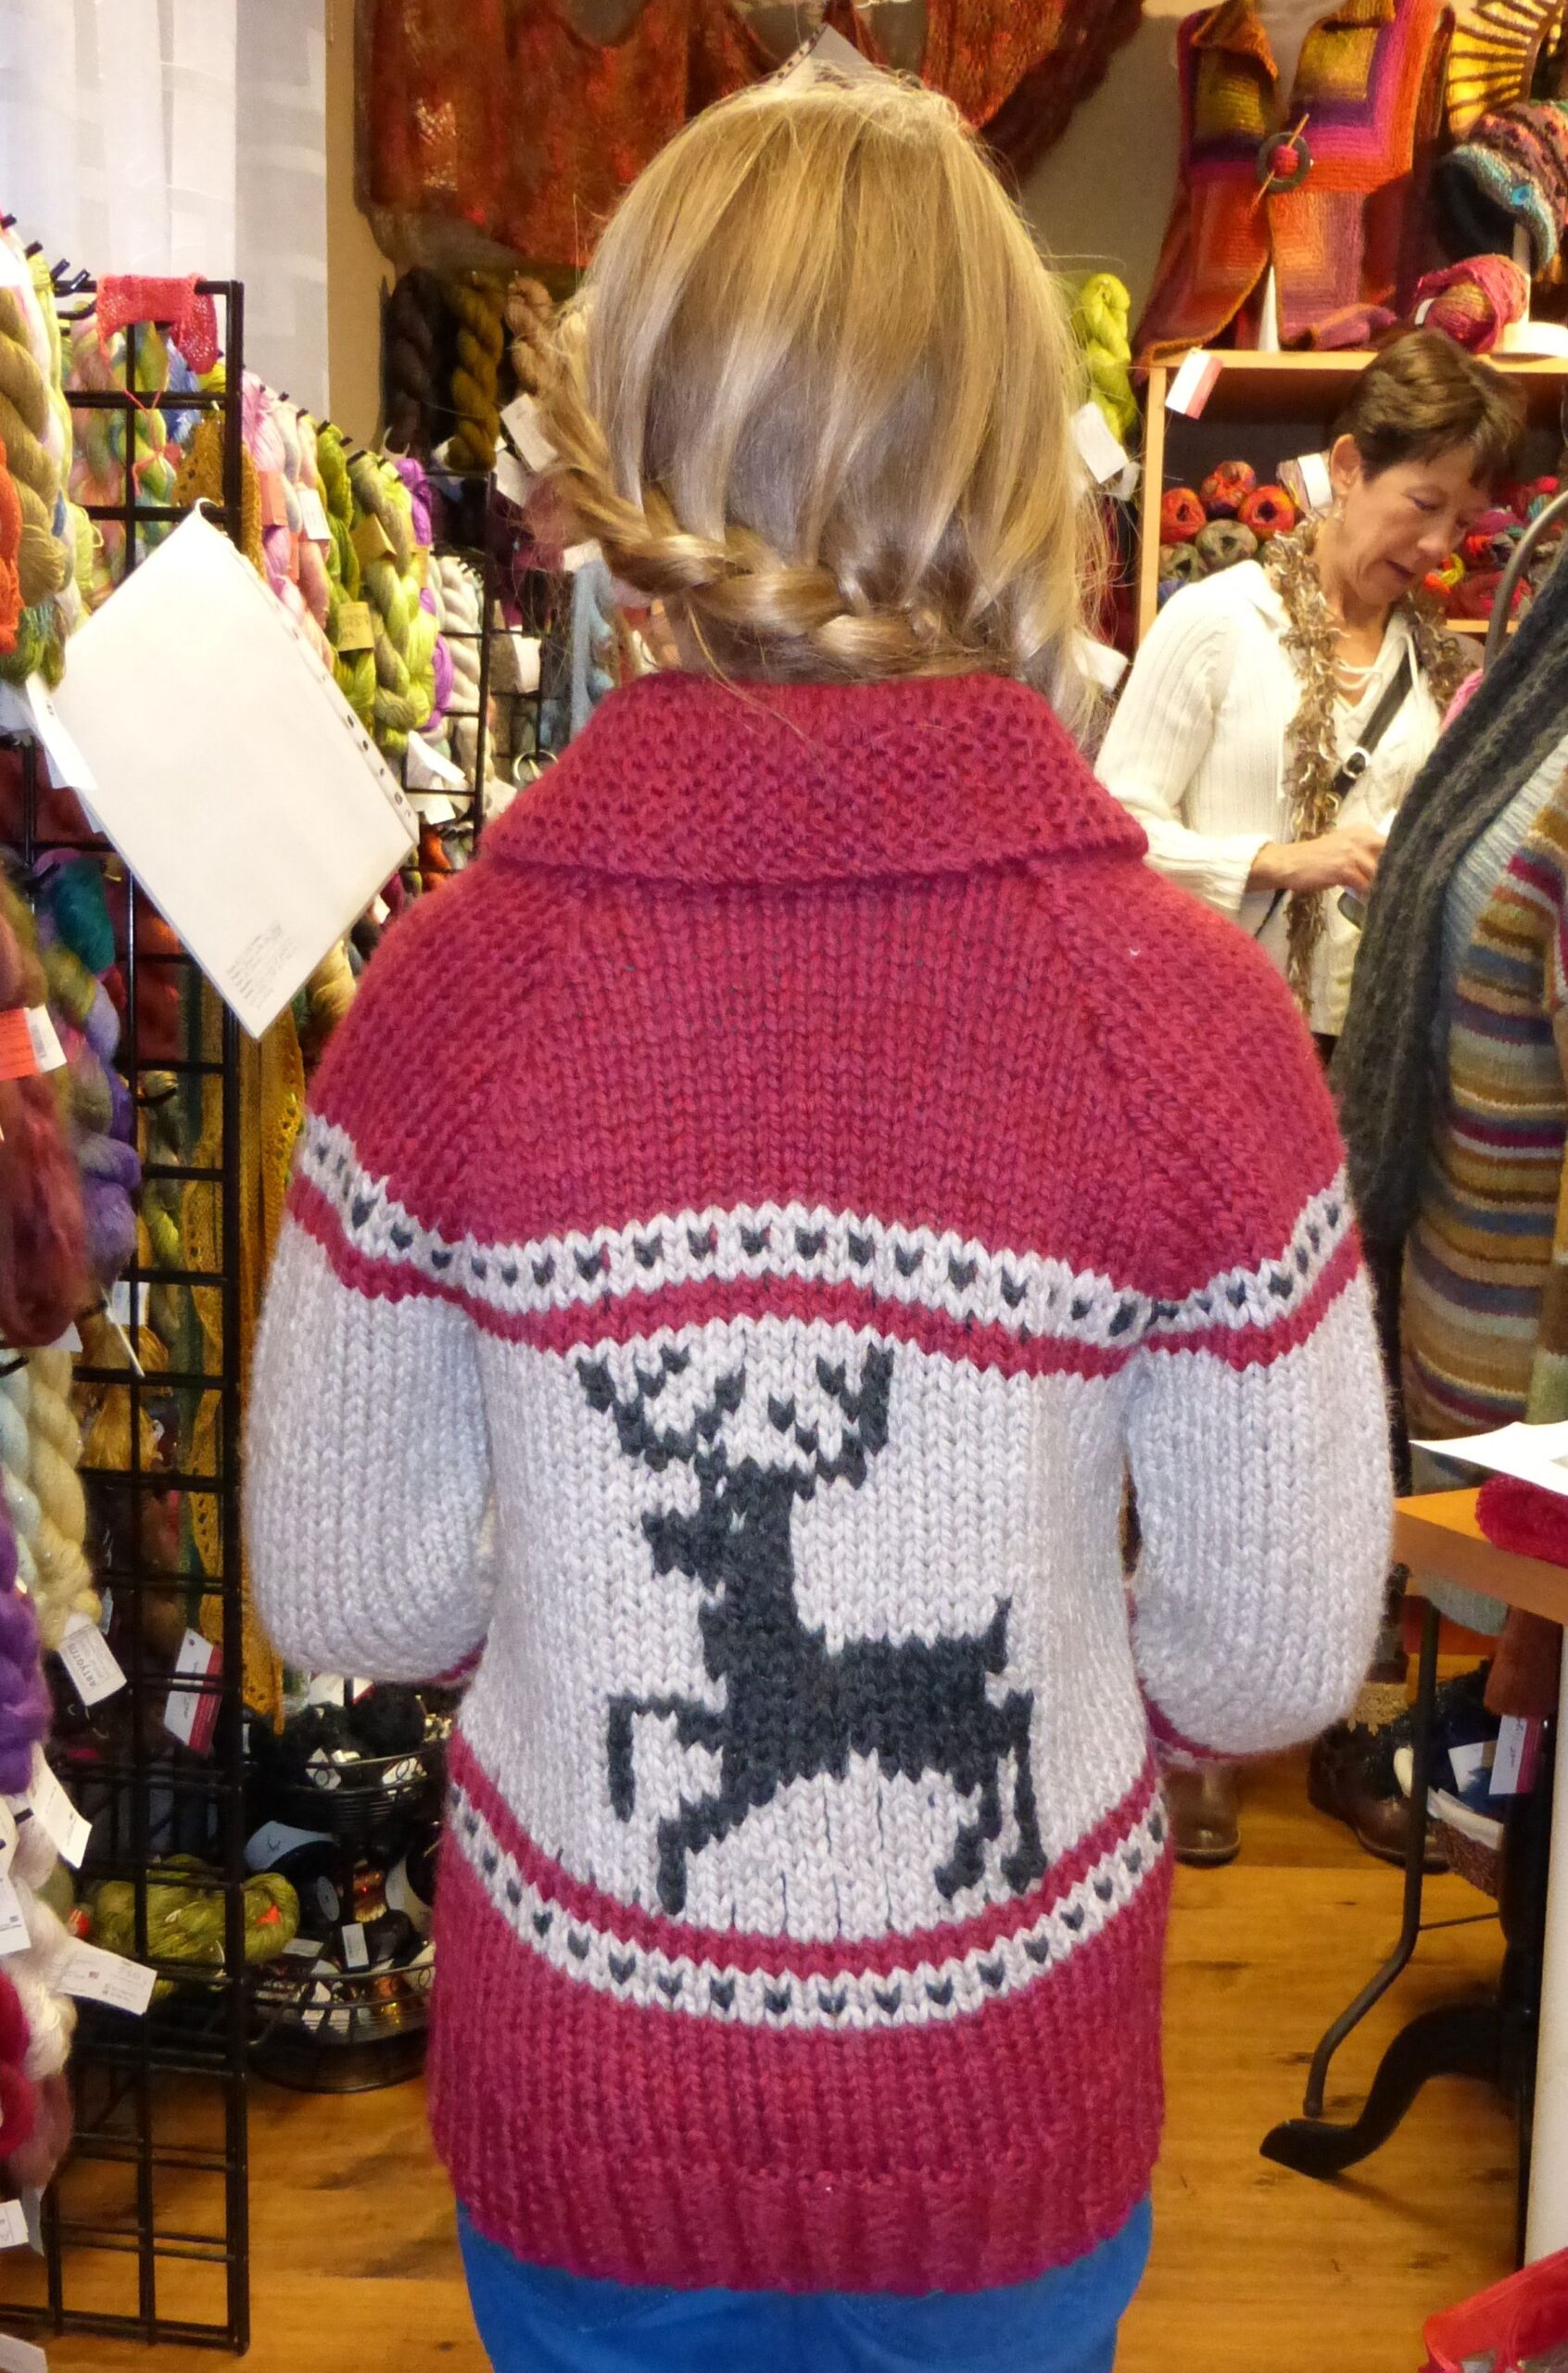 Reindeer Sweater For Warm
Festivities  In Winter